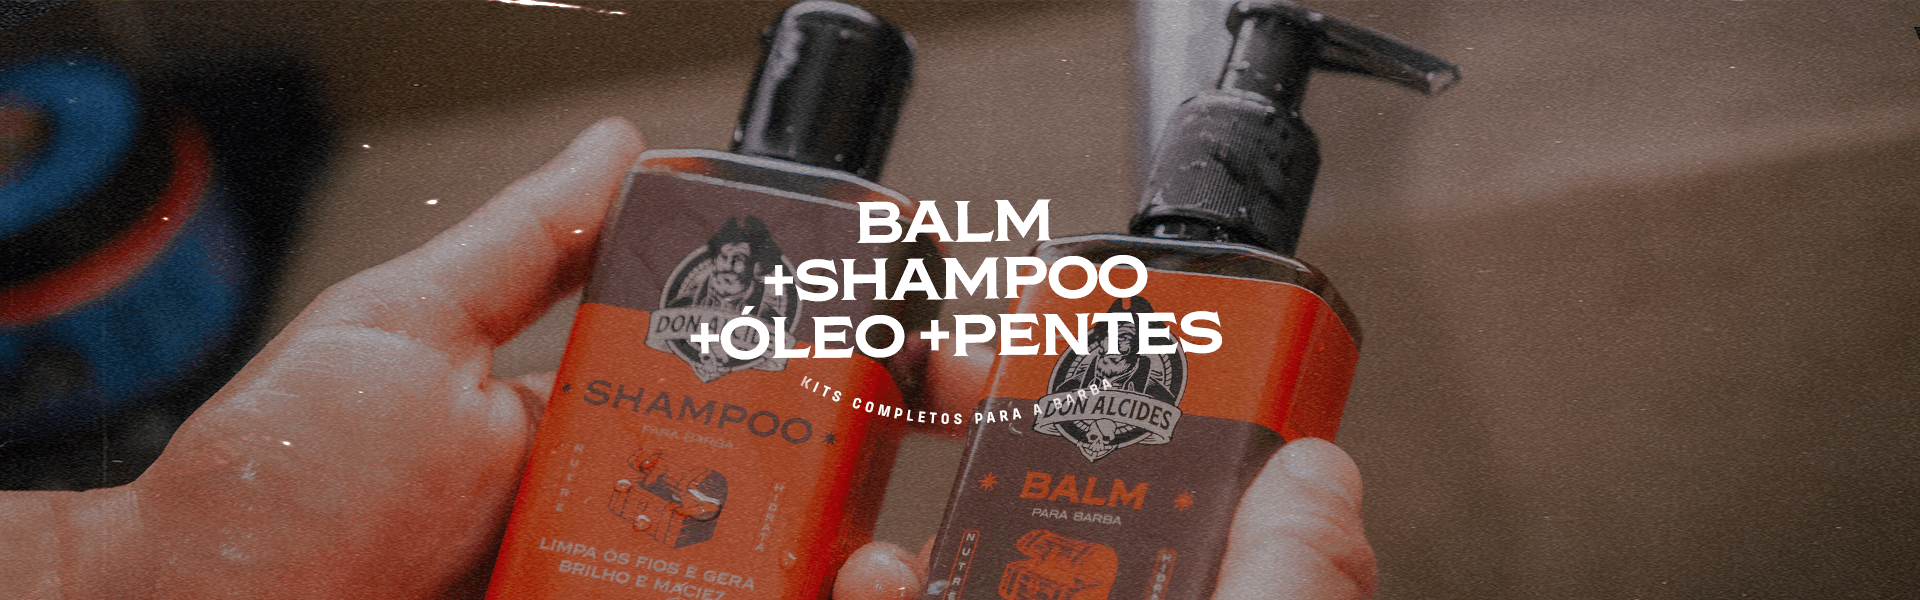 banner meio shampoo bam don alcides barba negra